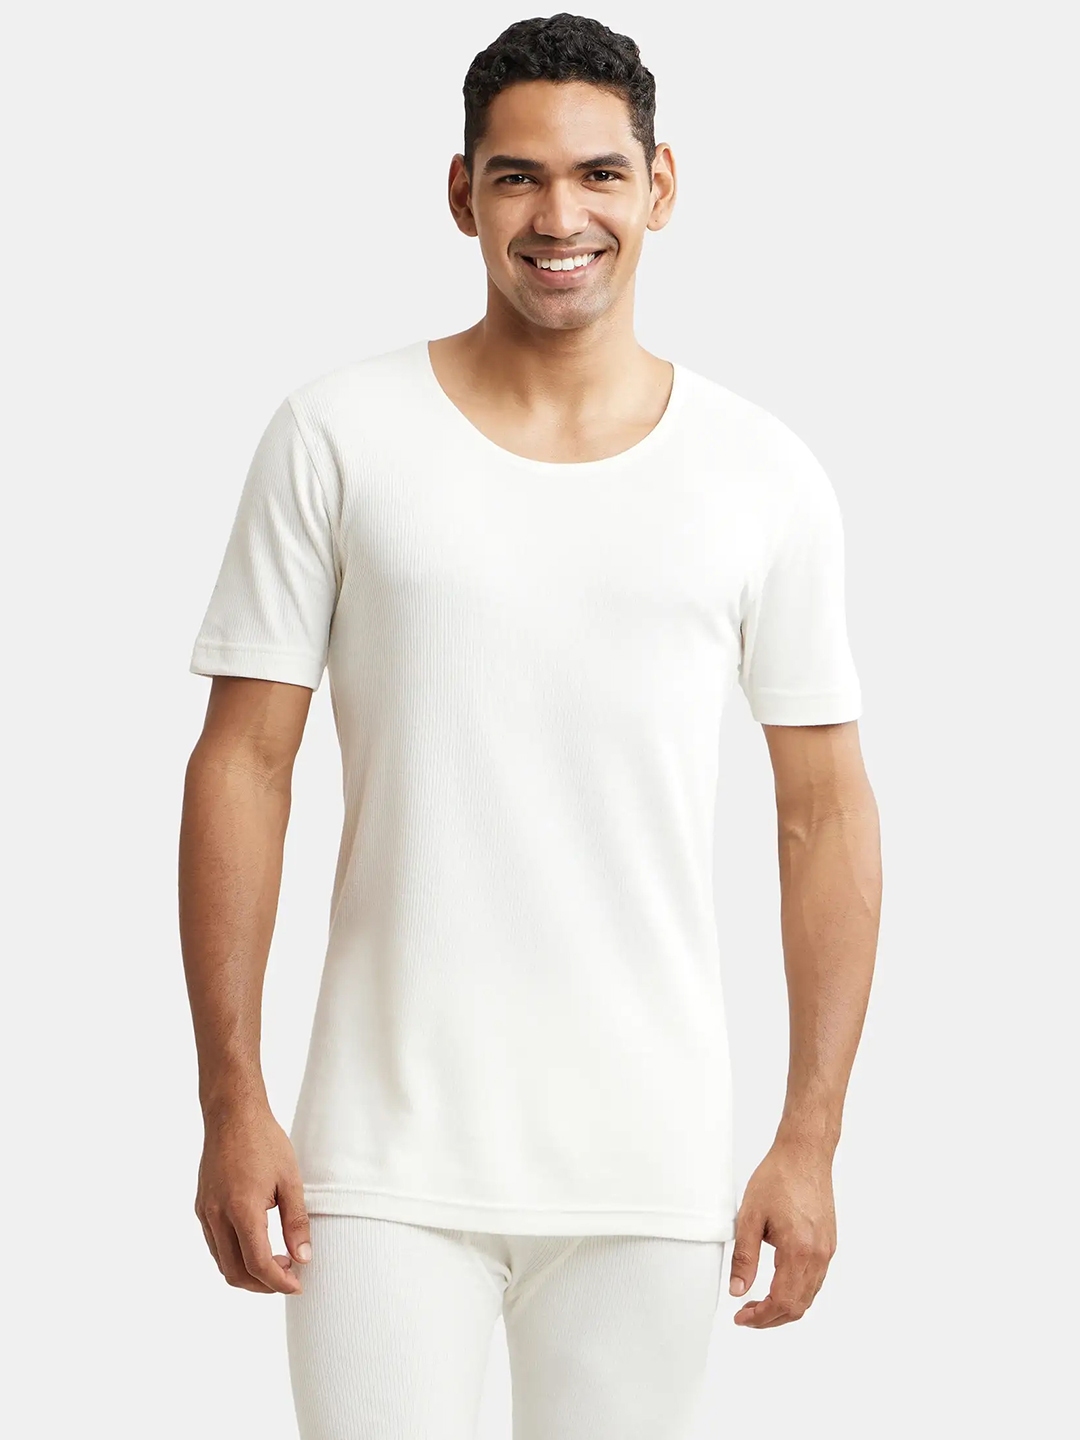 Buy Jockey THERMALS Men White Thermal T Shirt 2400 - Thermal Tops